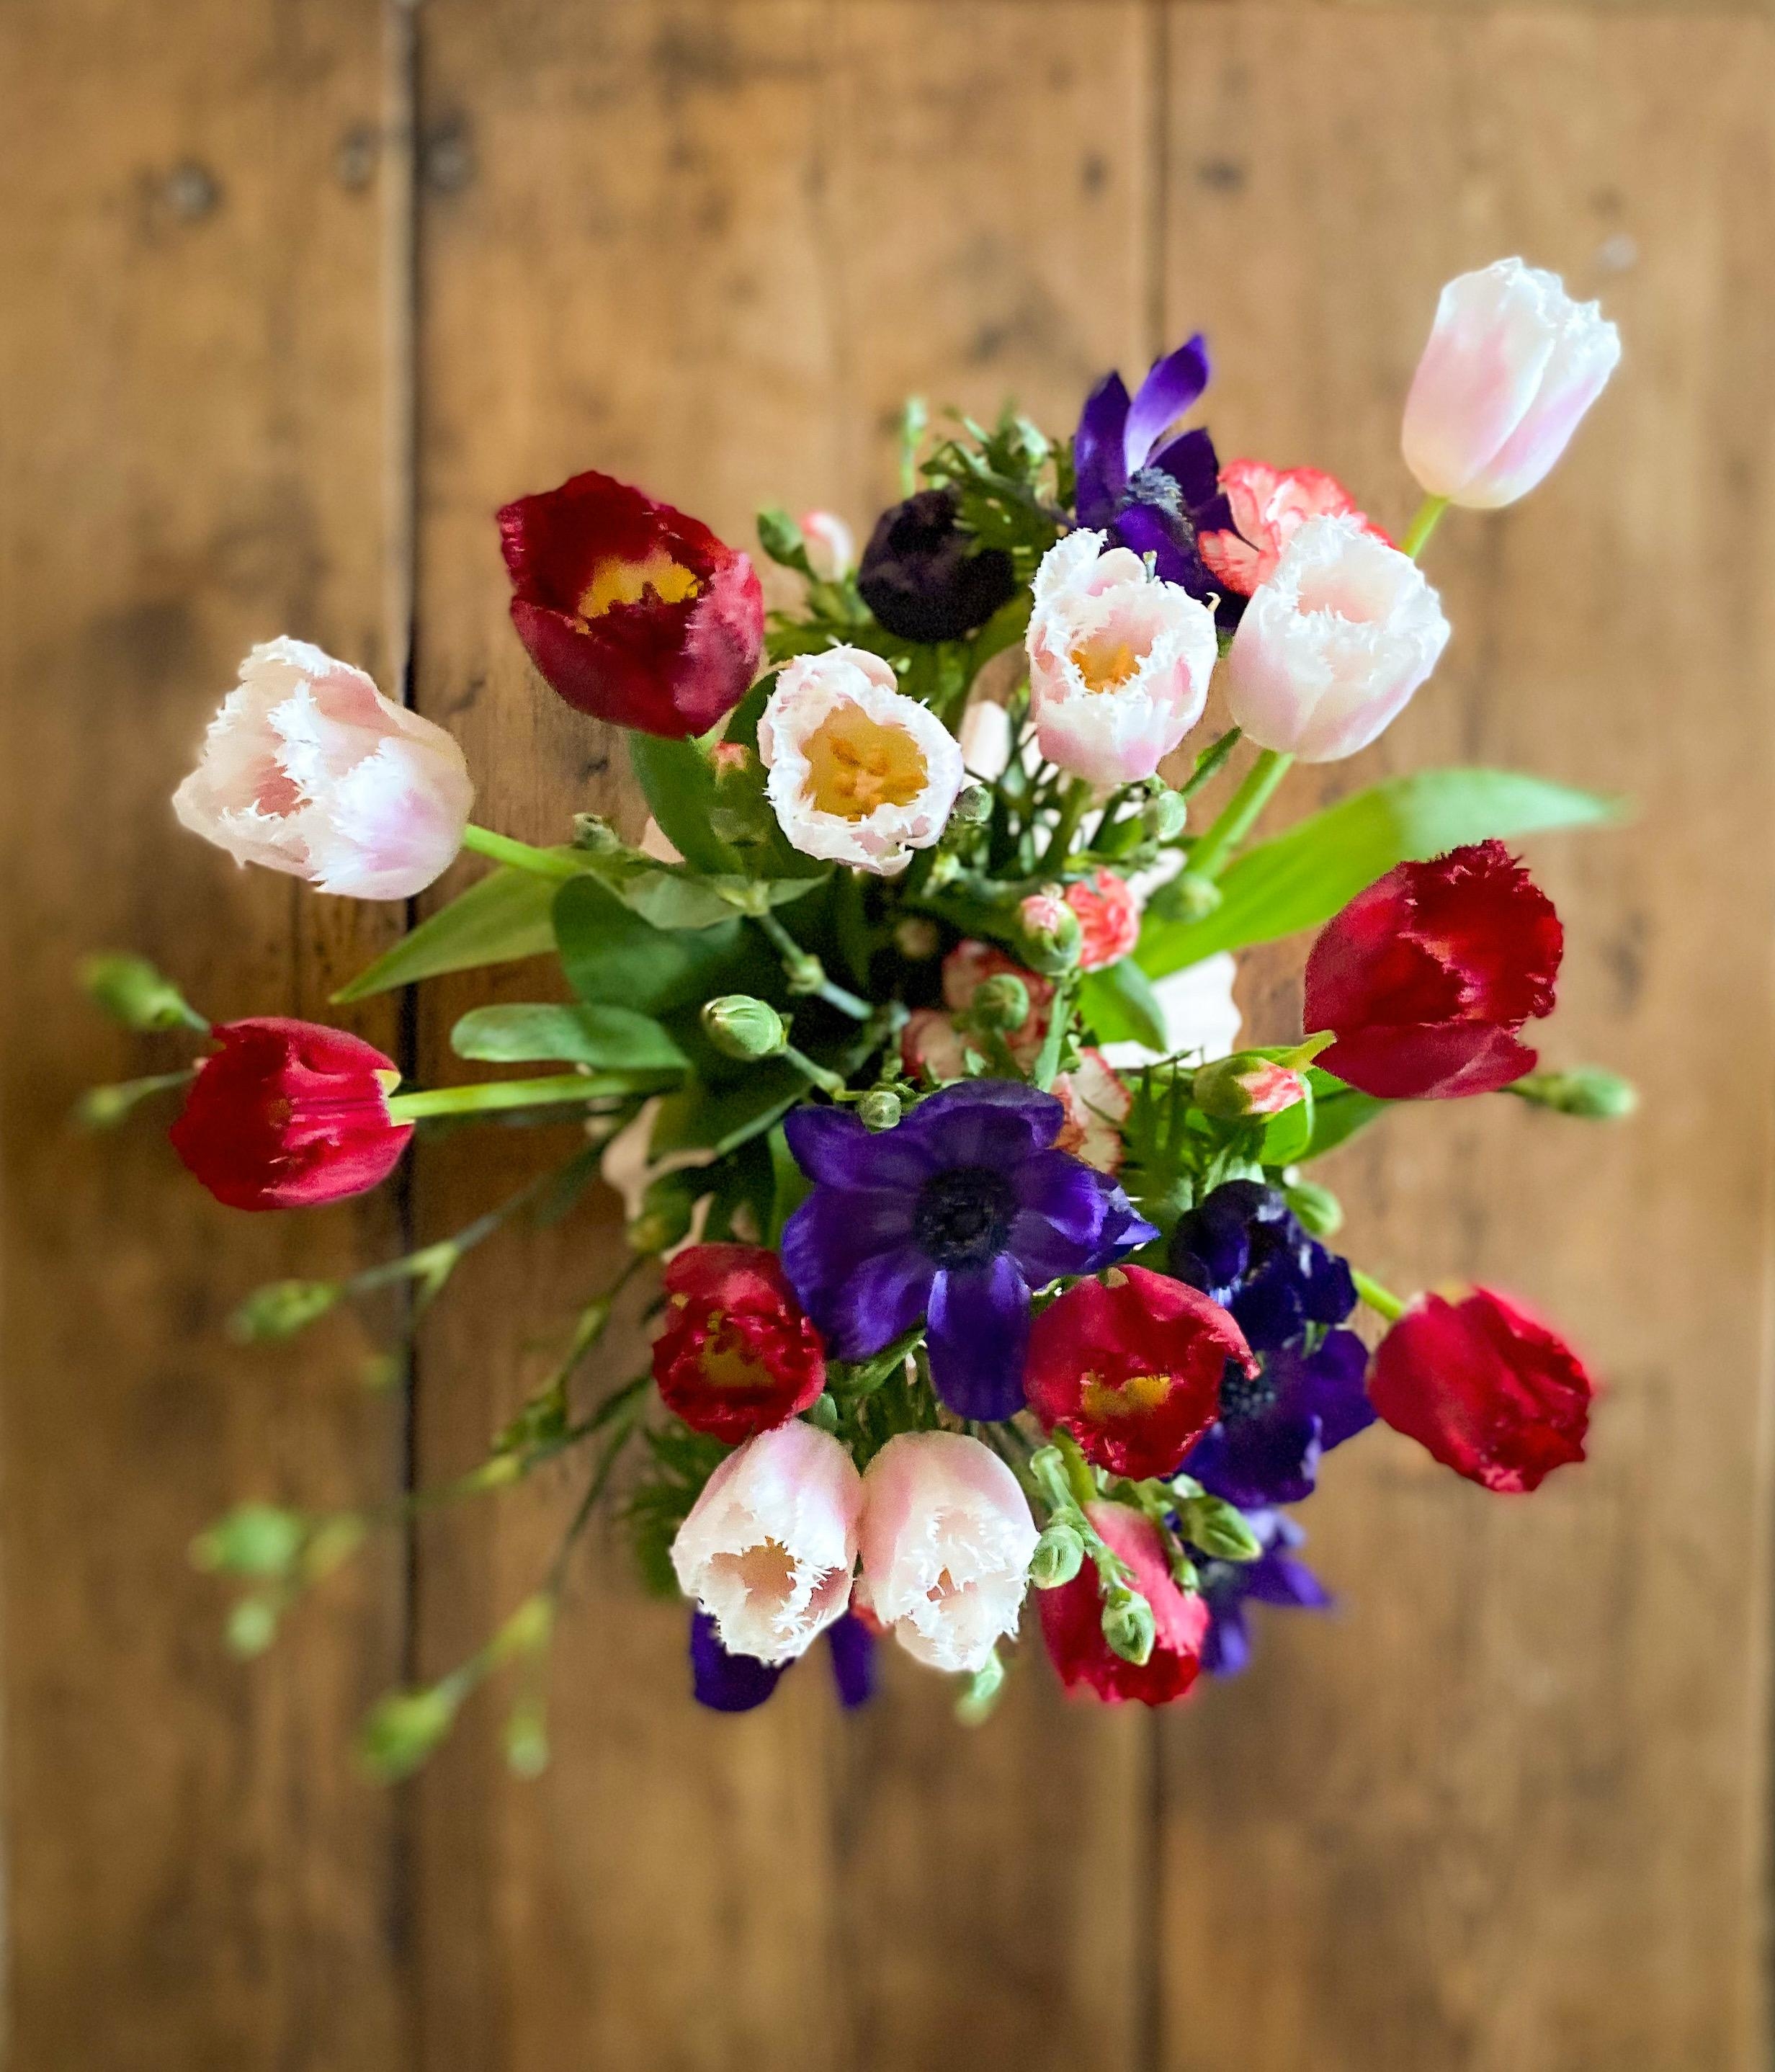 Frühlingsstrauß ❤️
#blumen #tulpen #freshflowers #frühling